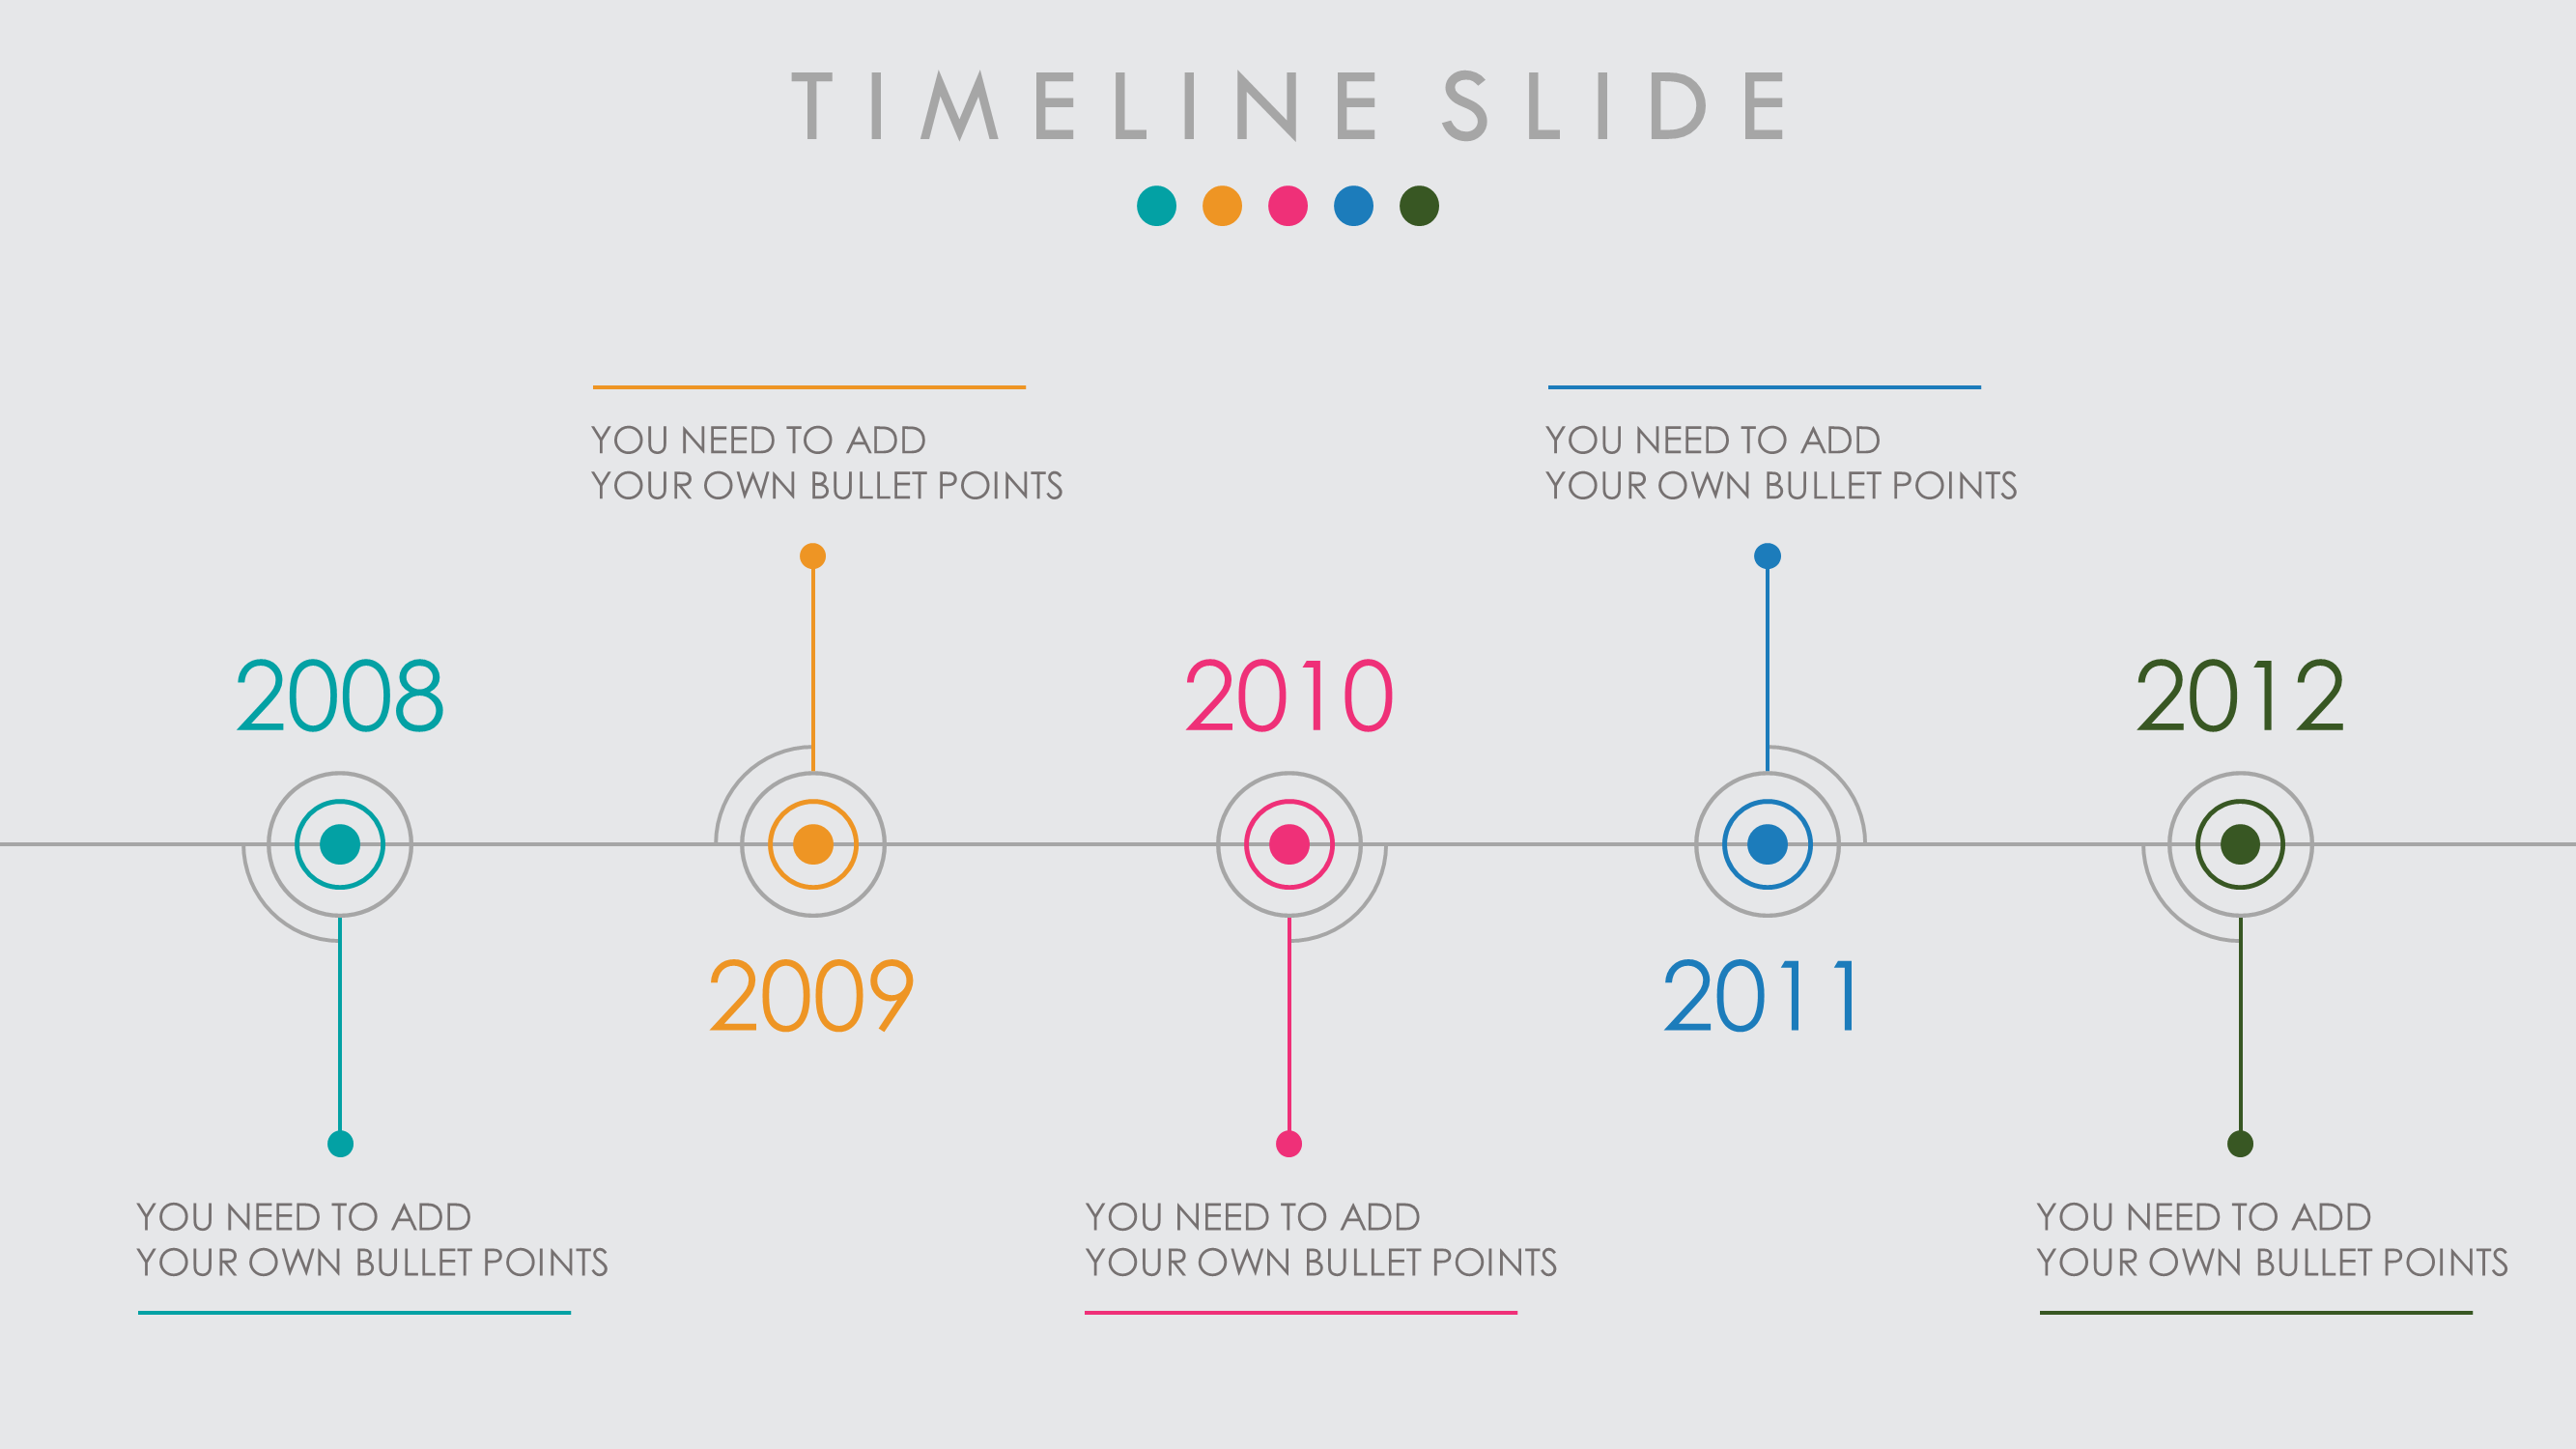 timeline template omni graffle professional